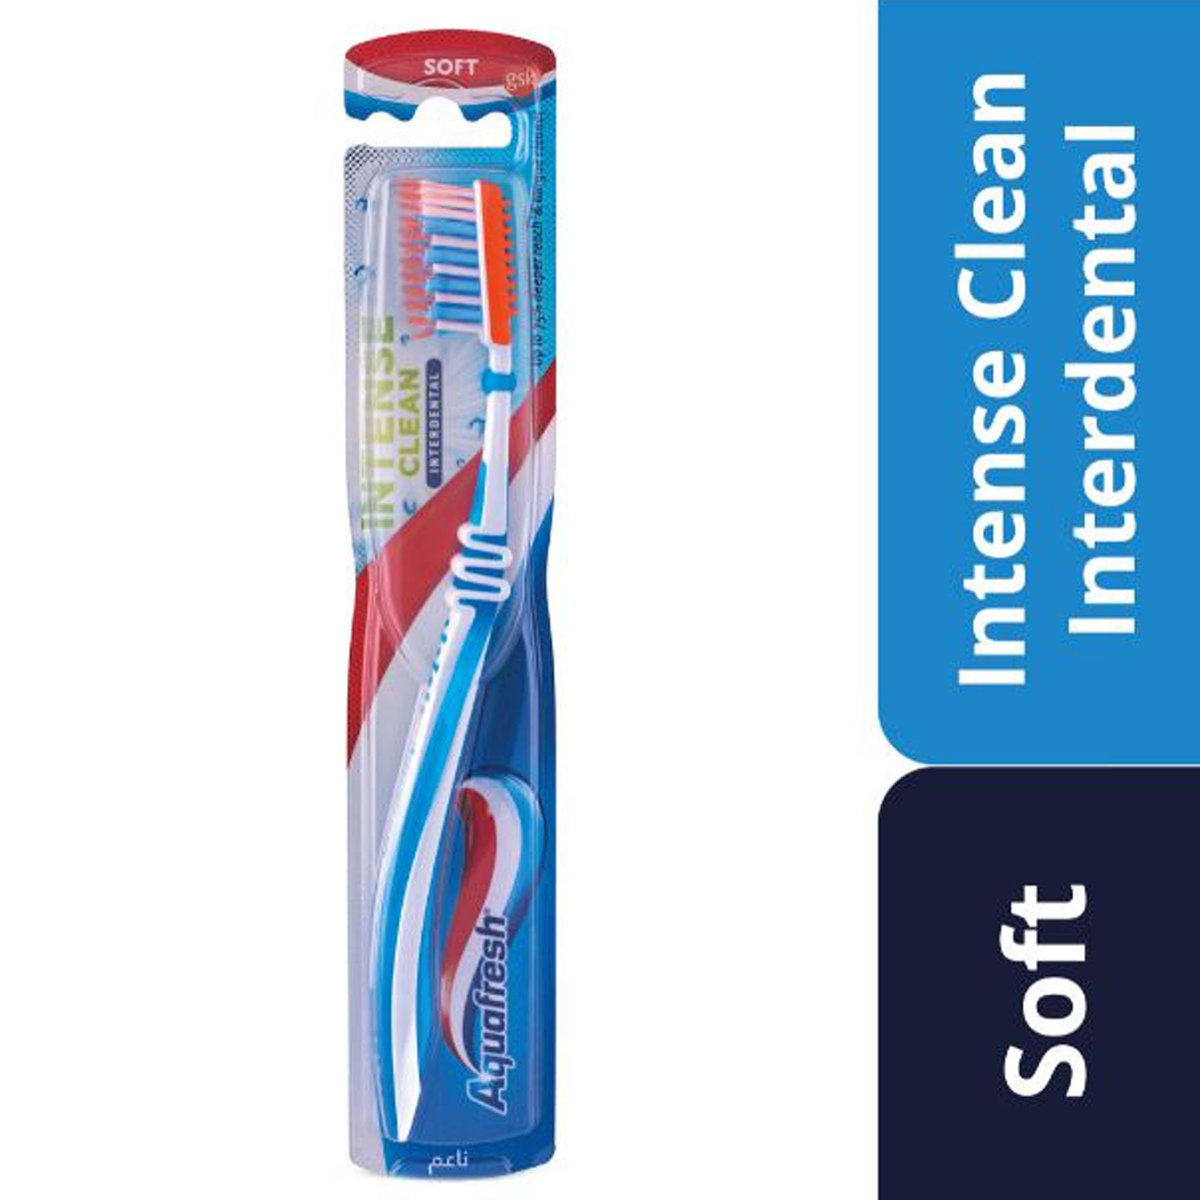 Aquafresh Intense Clean Interdental Toothbrush Soft Assorted Color 1 pc